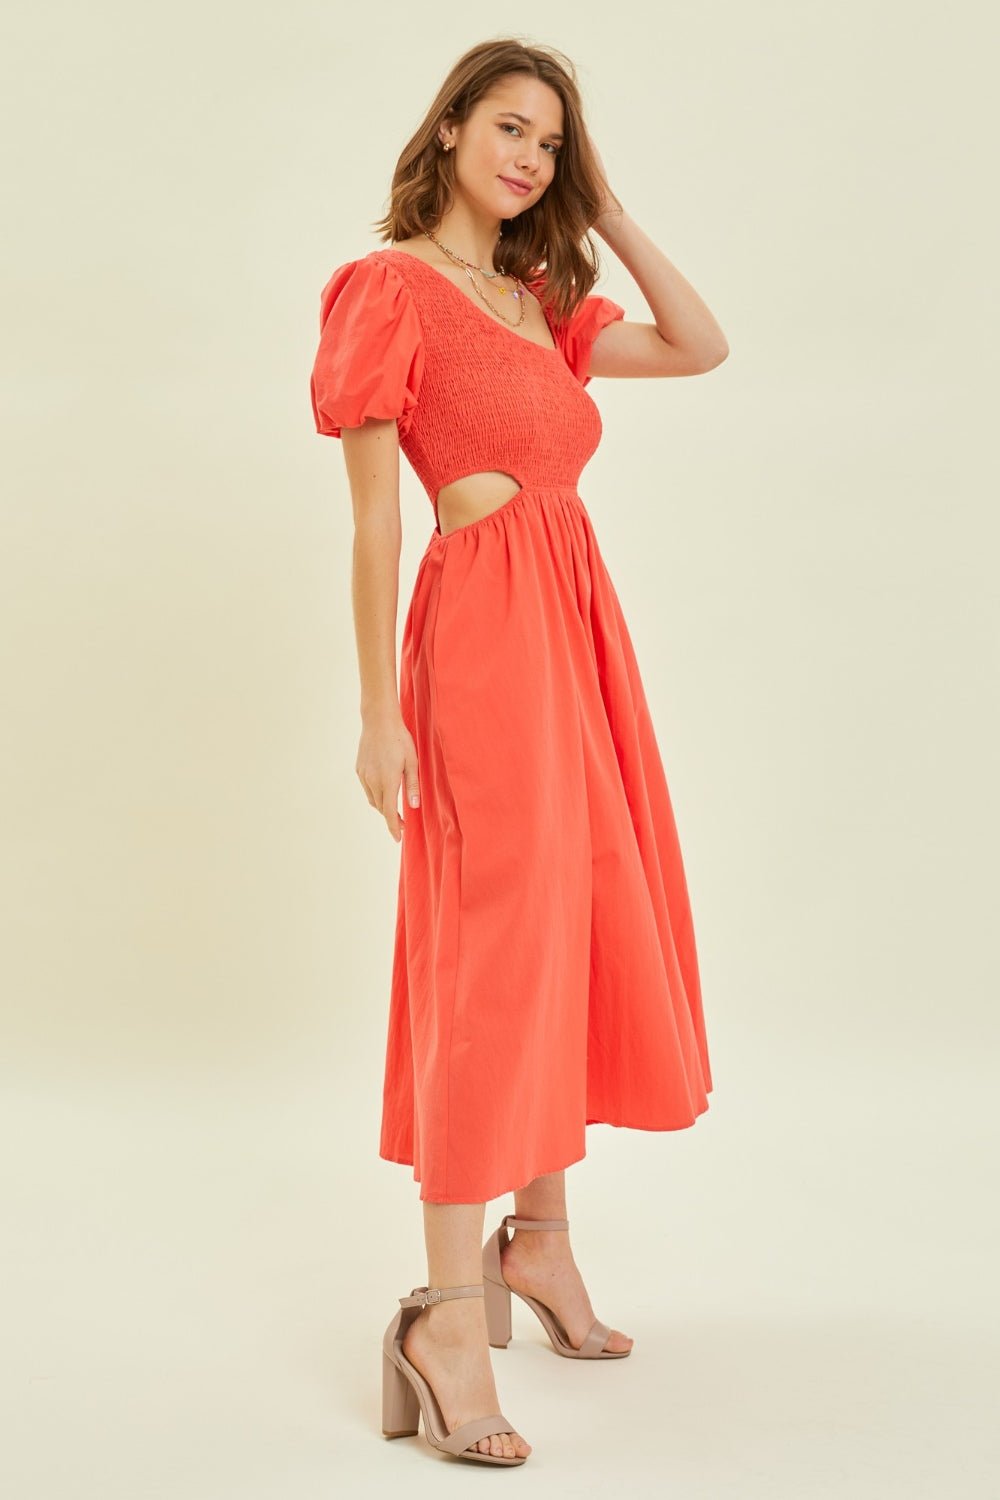 Smocked Cutout Midi Dress in Cherry RedMidi DressHEYSON